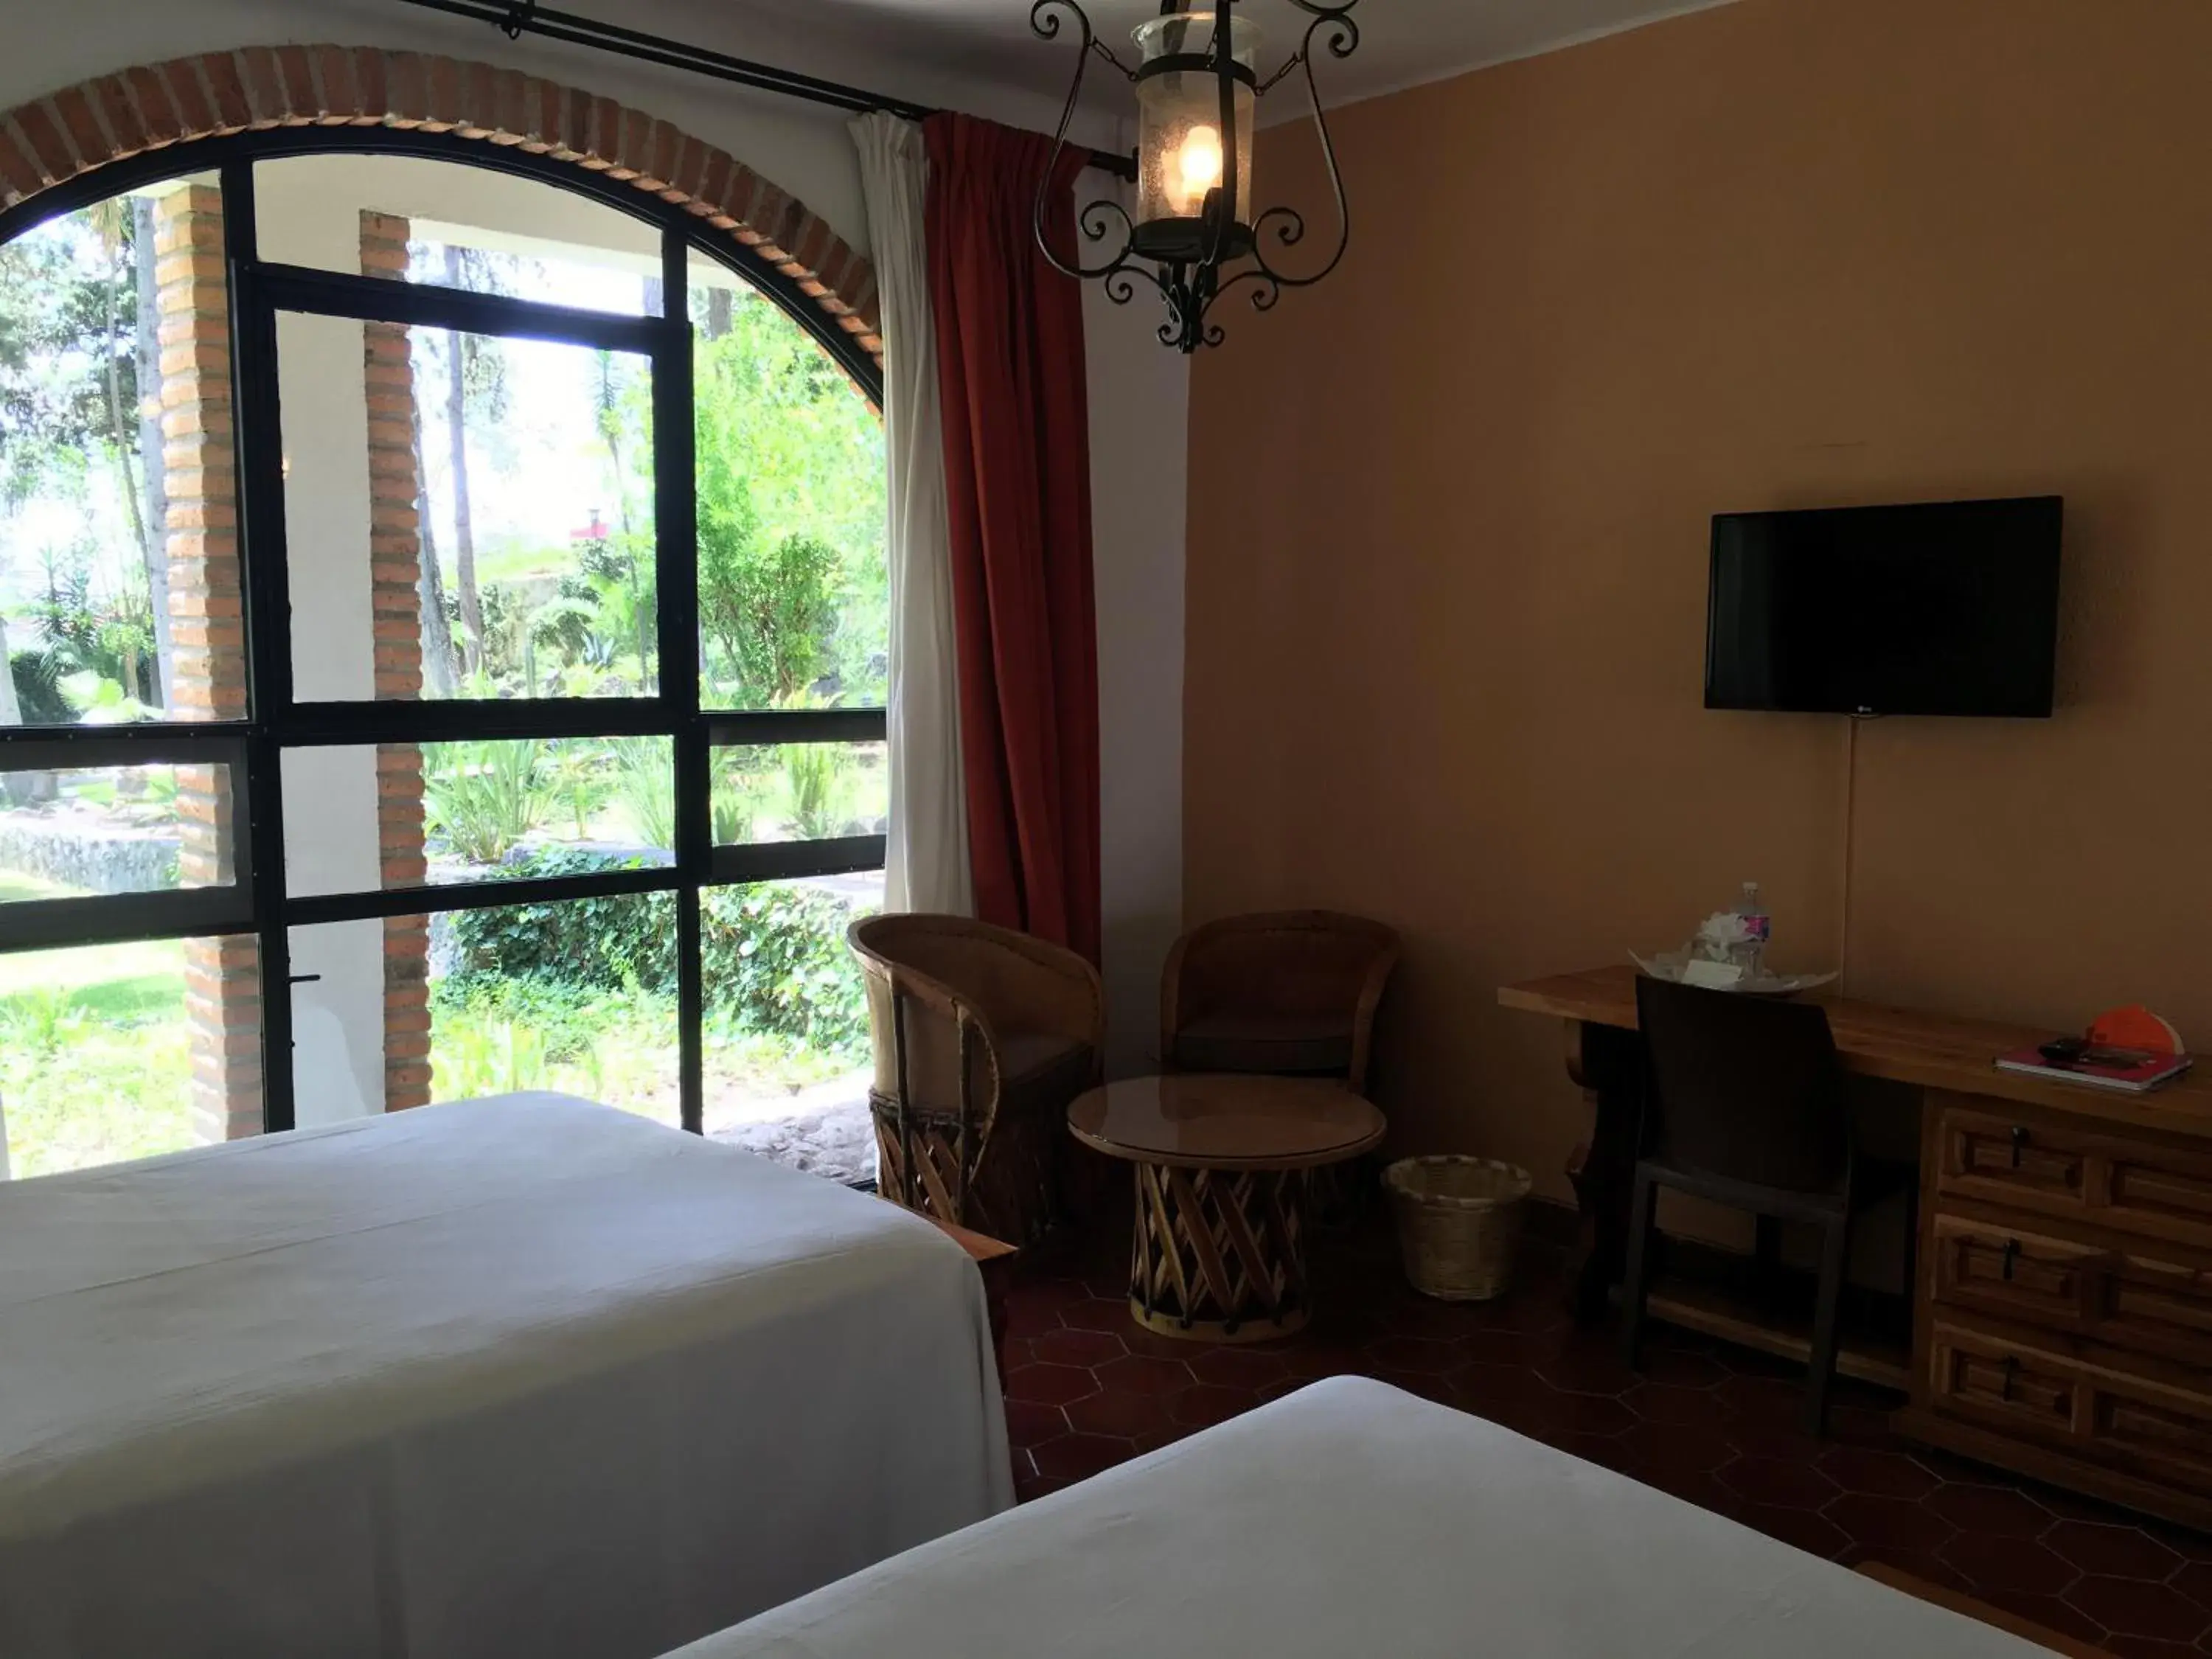 Bed, Room Photo in Rancho Hotel Atascadero